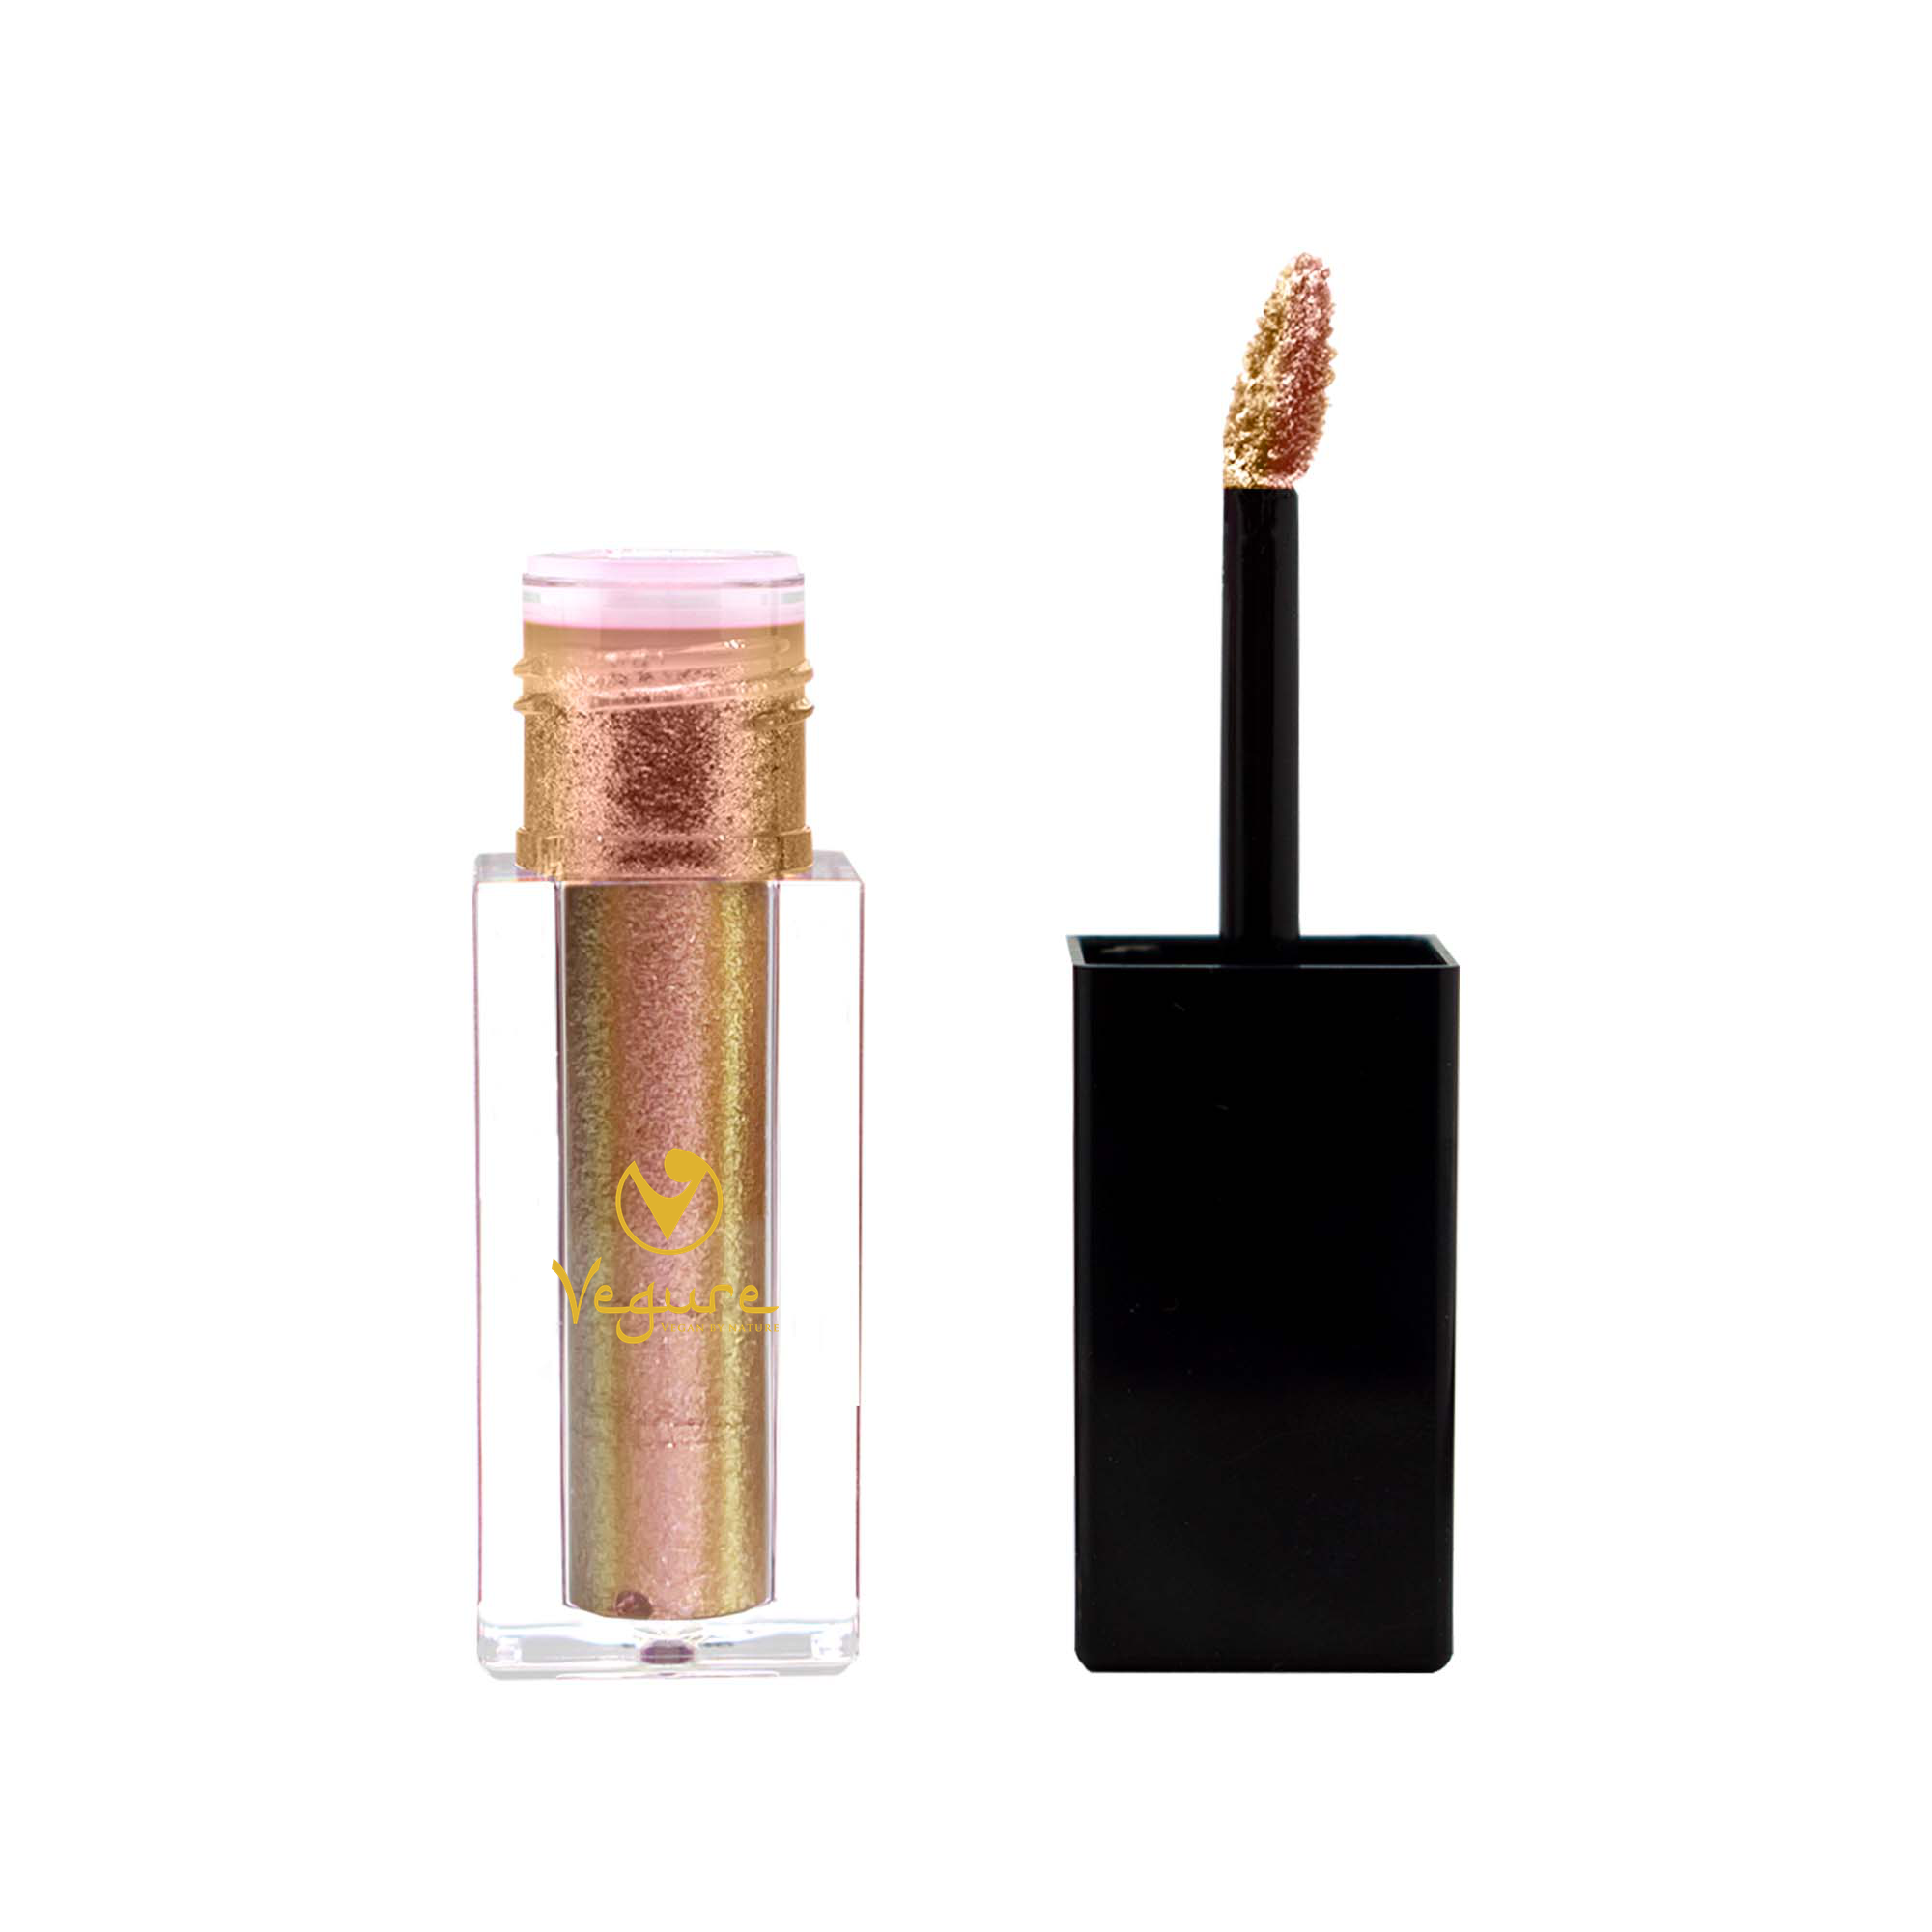 Liquid Shimmer - Euphoria : eyeshadows, highlighters, and lipsticks use